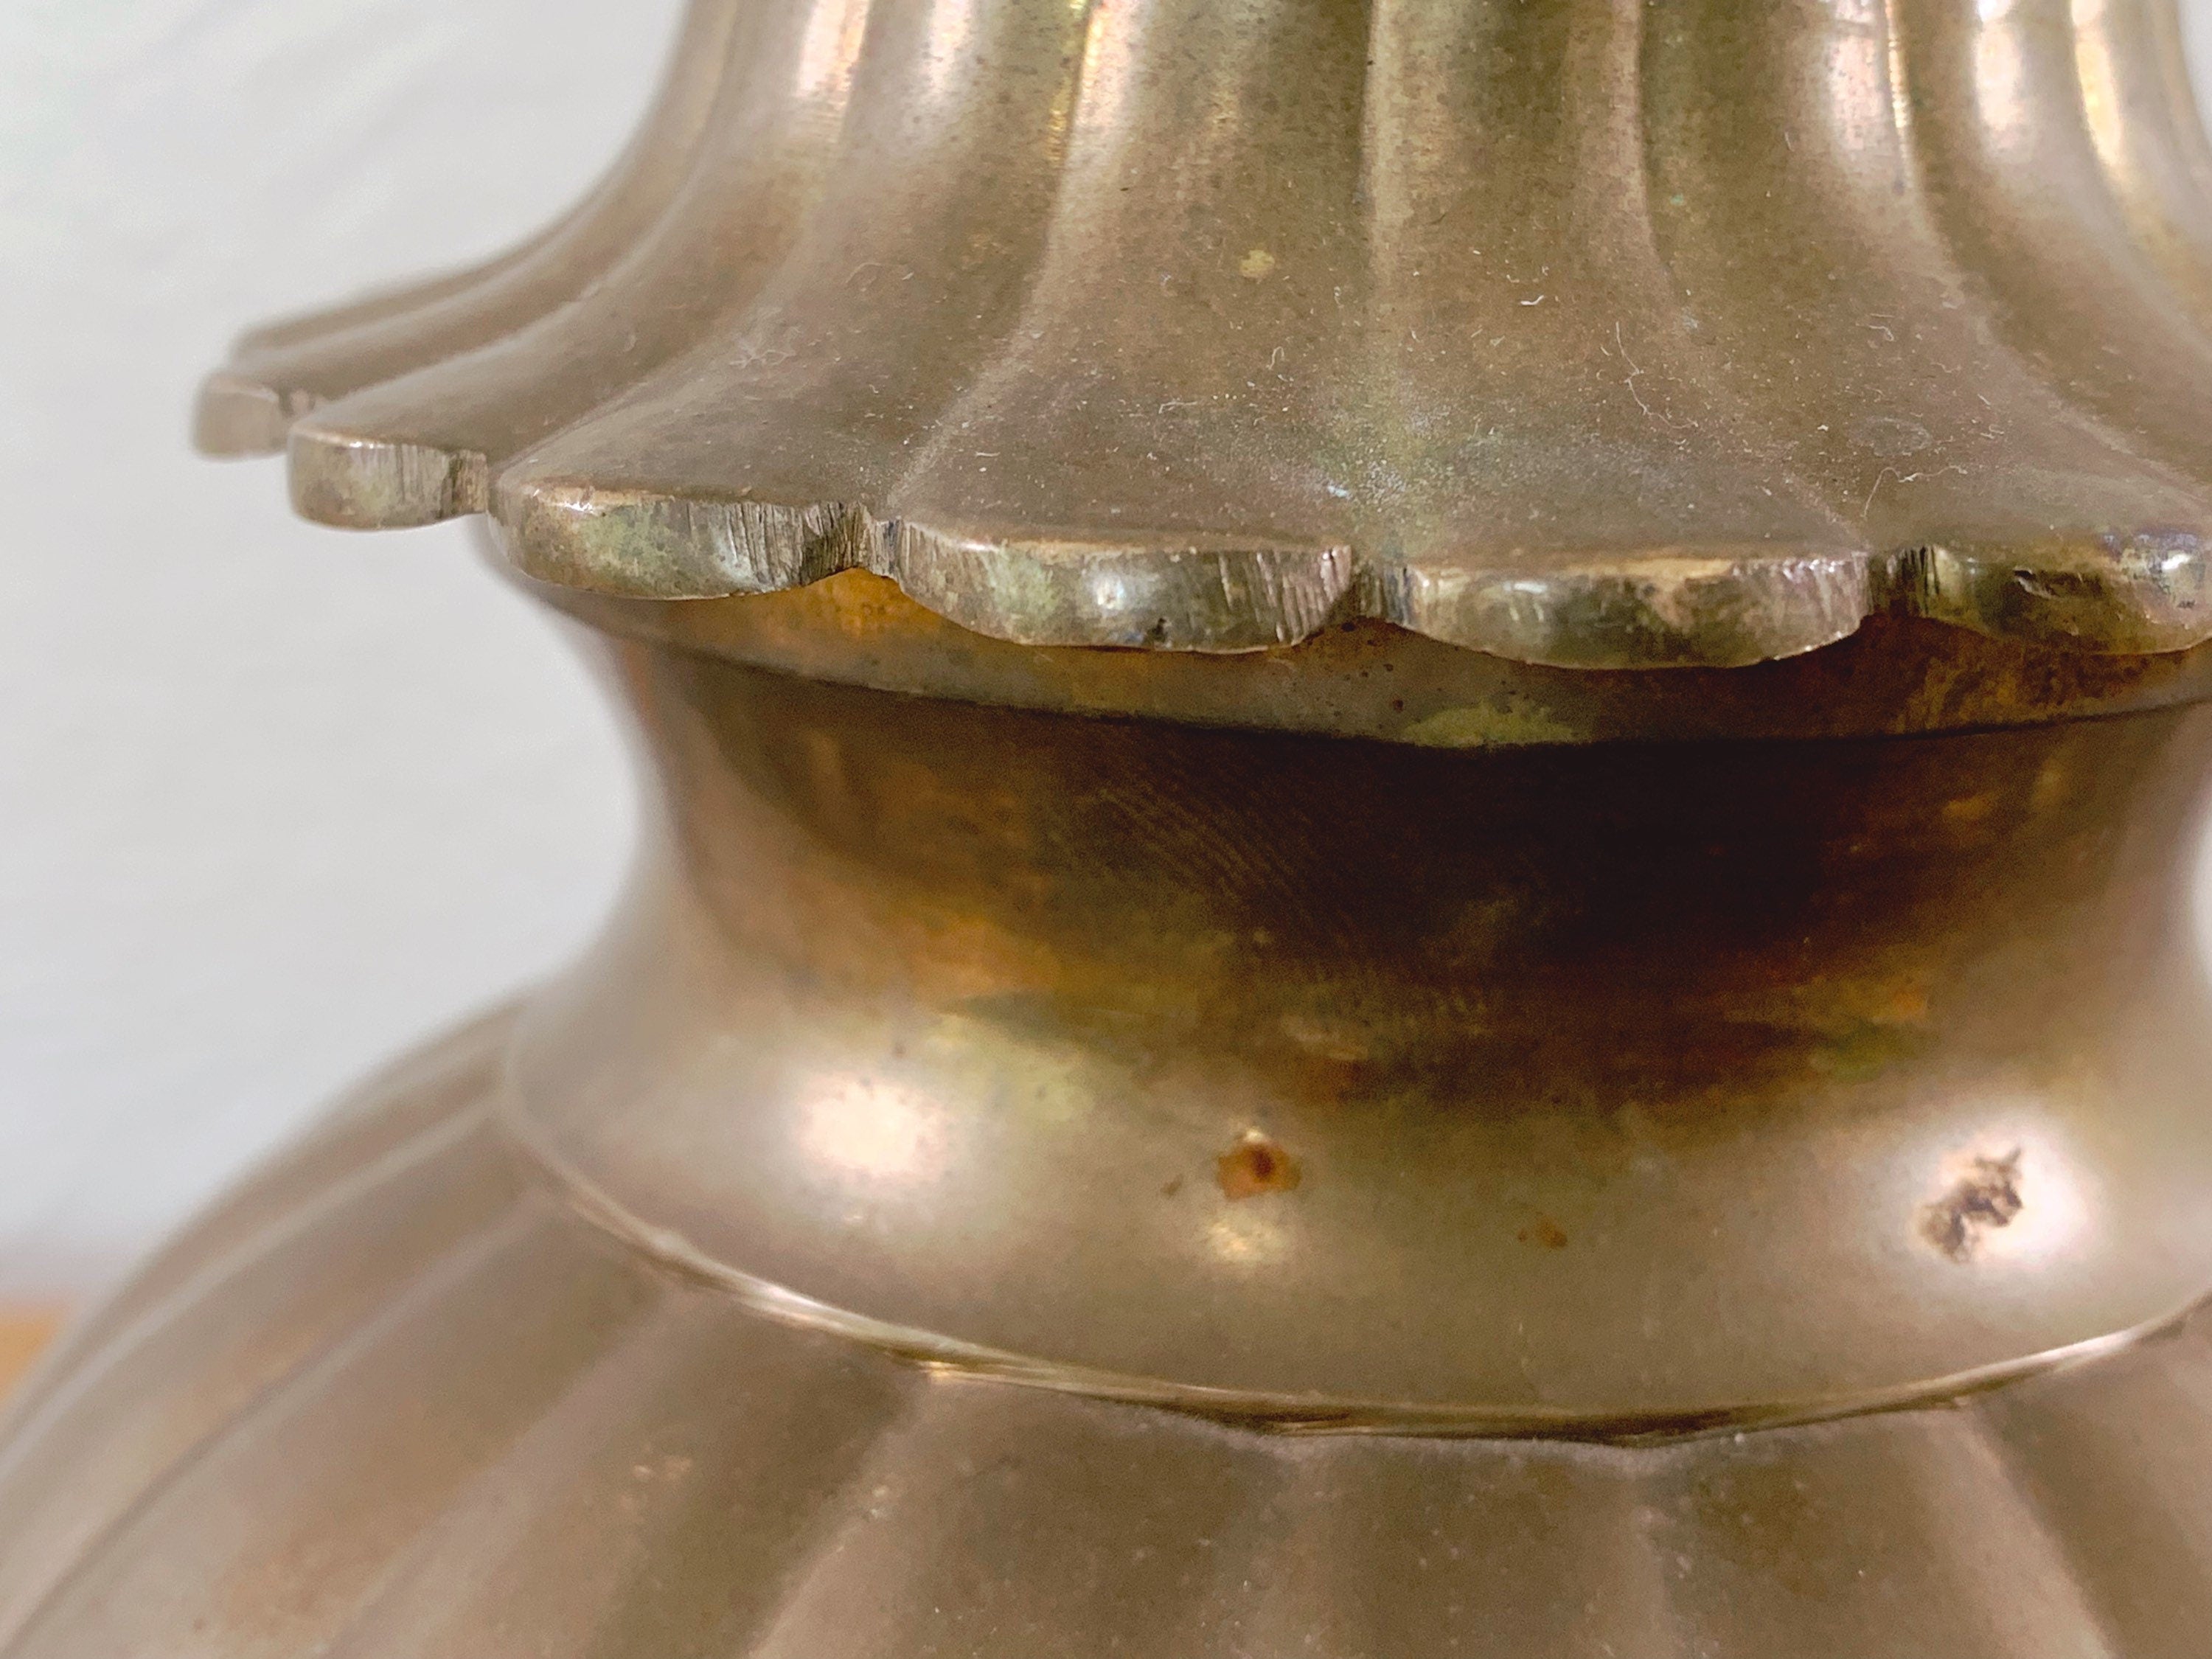 Vintage Aged Brass Urn Ginger Jar | Flower Shape with Lid | Made in India | Boho Chic Flower Vase Asian Inspired Home Decor | Gift for Her